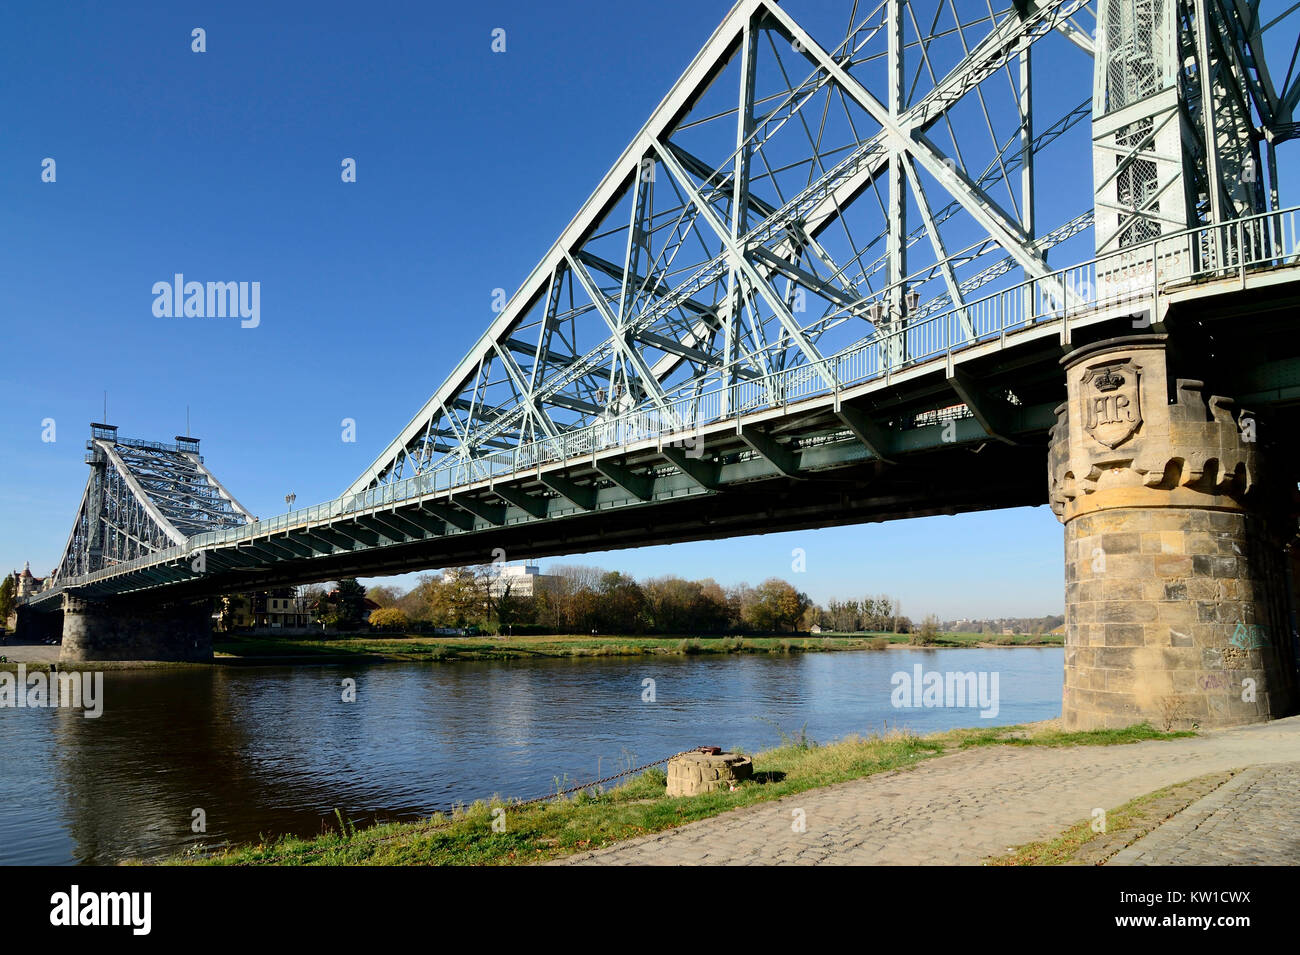 A Dresda, Loschwitzer Brücke Blaues Wunder Foto Stock